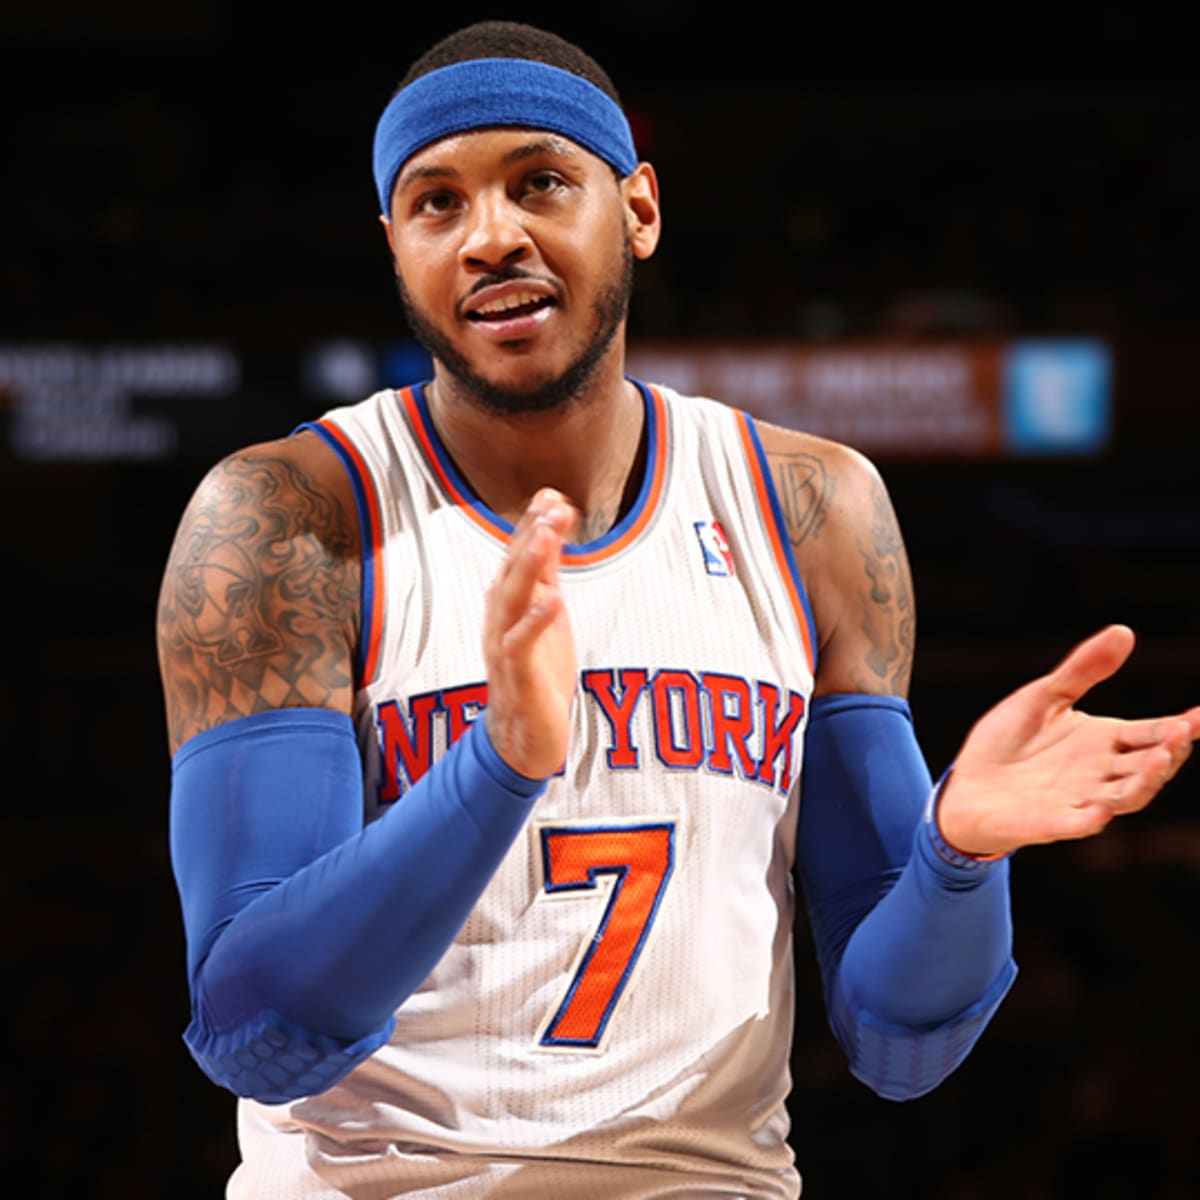 Knicks Agree to Trade Chandler and Felton to Mavericks - The New